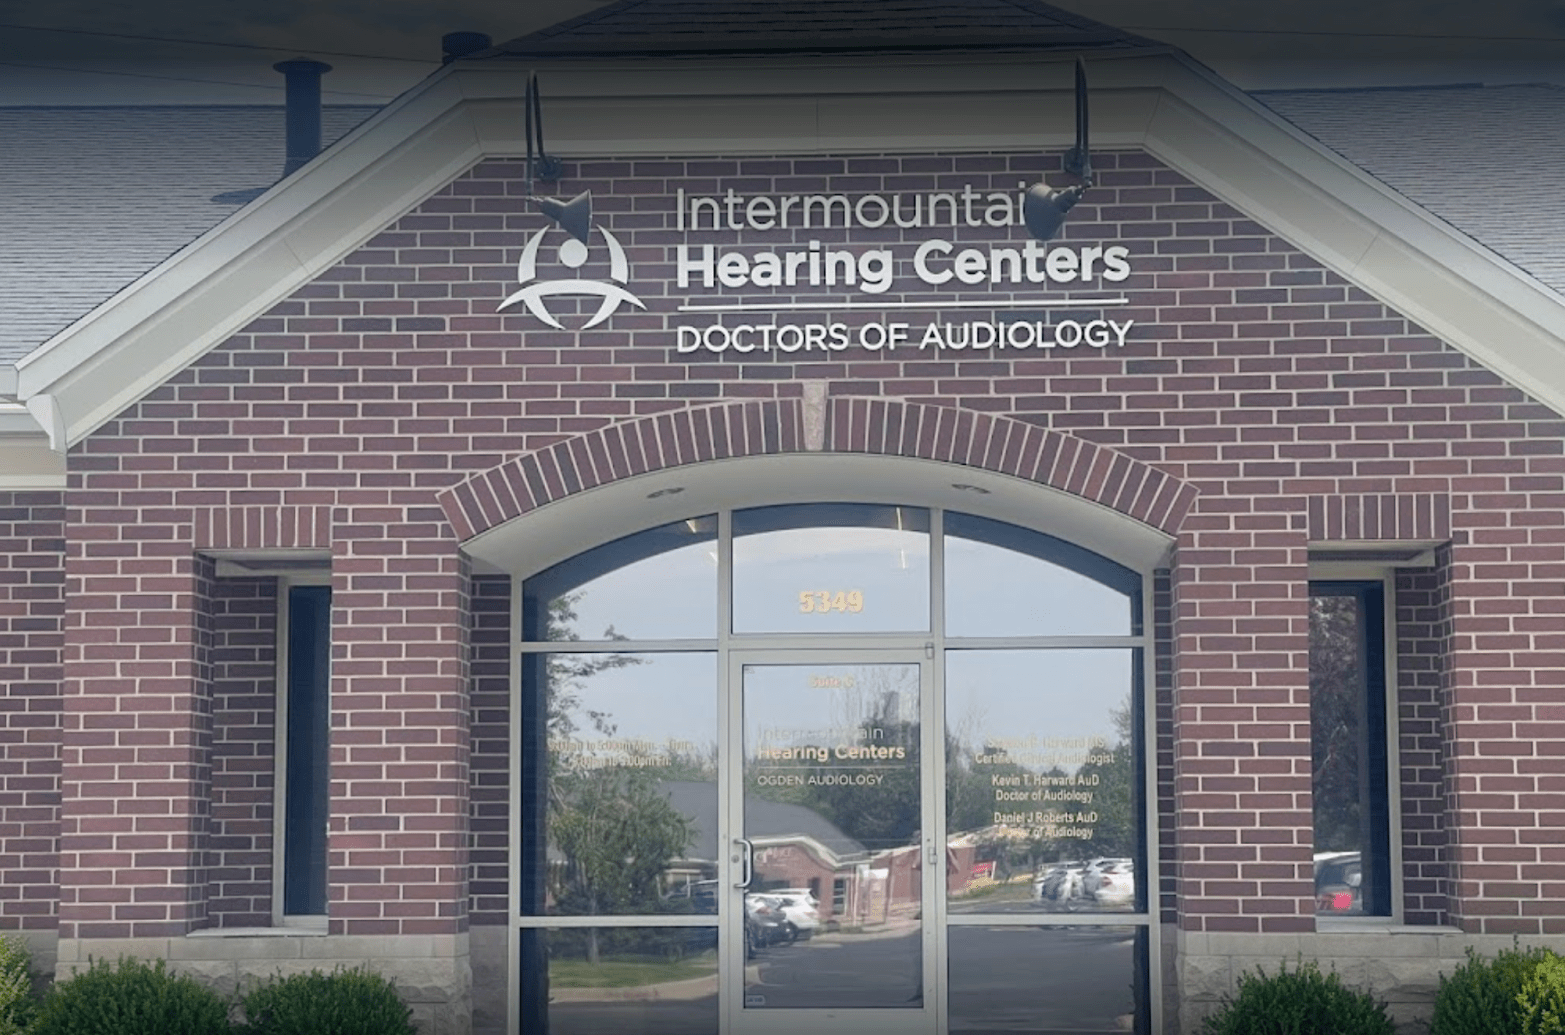  Intermountain Hearing Centers